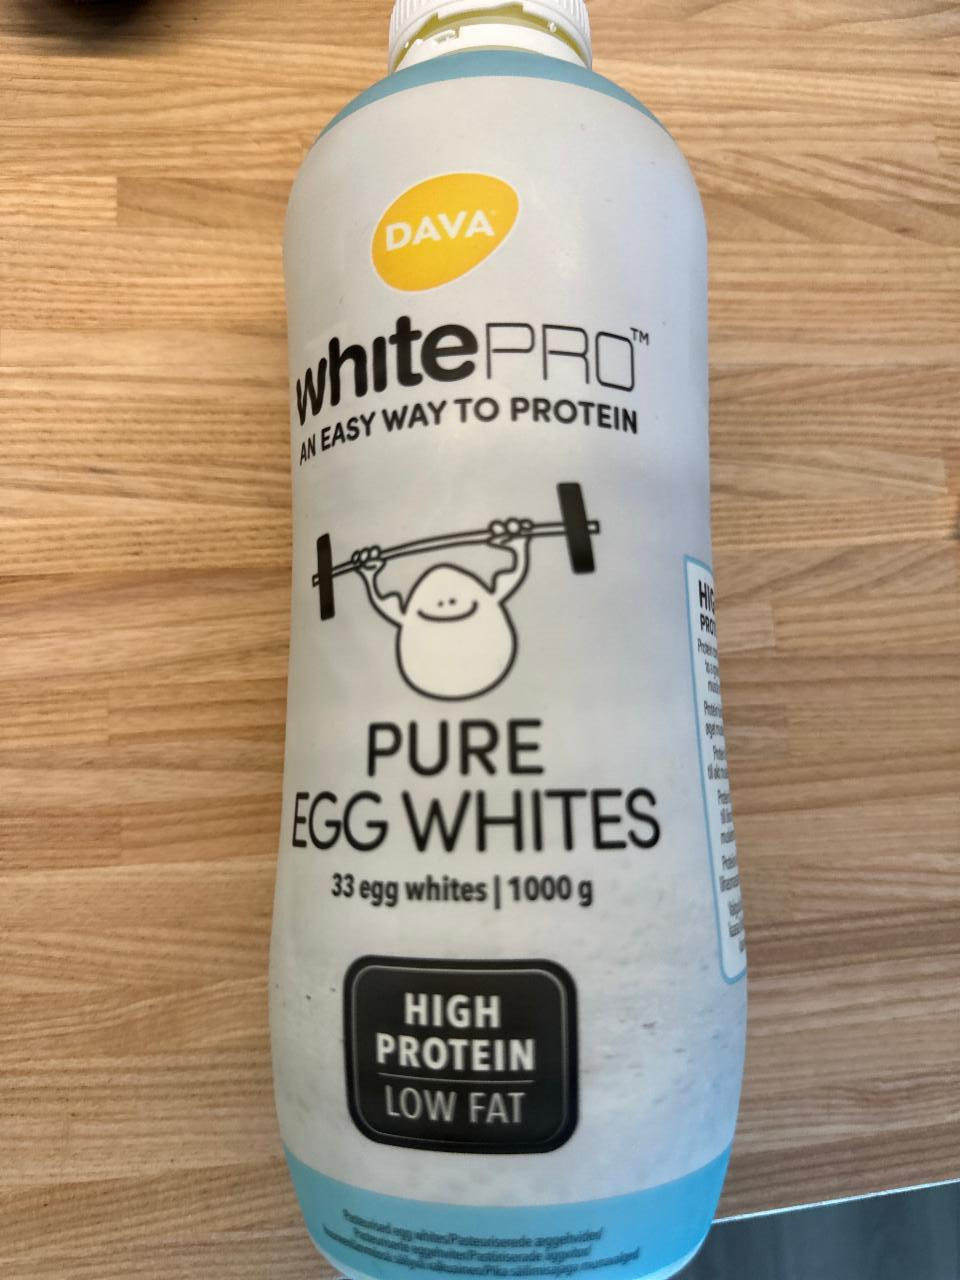 Фото - Яичный белок Egge white WhitePro dava foods